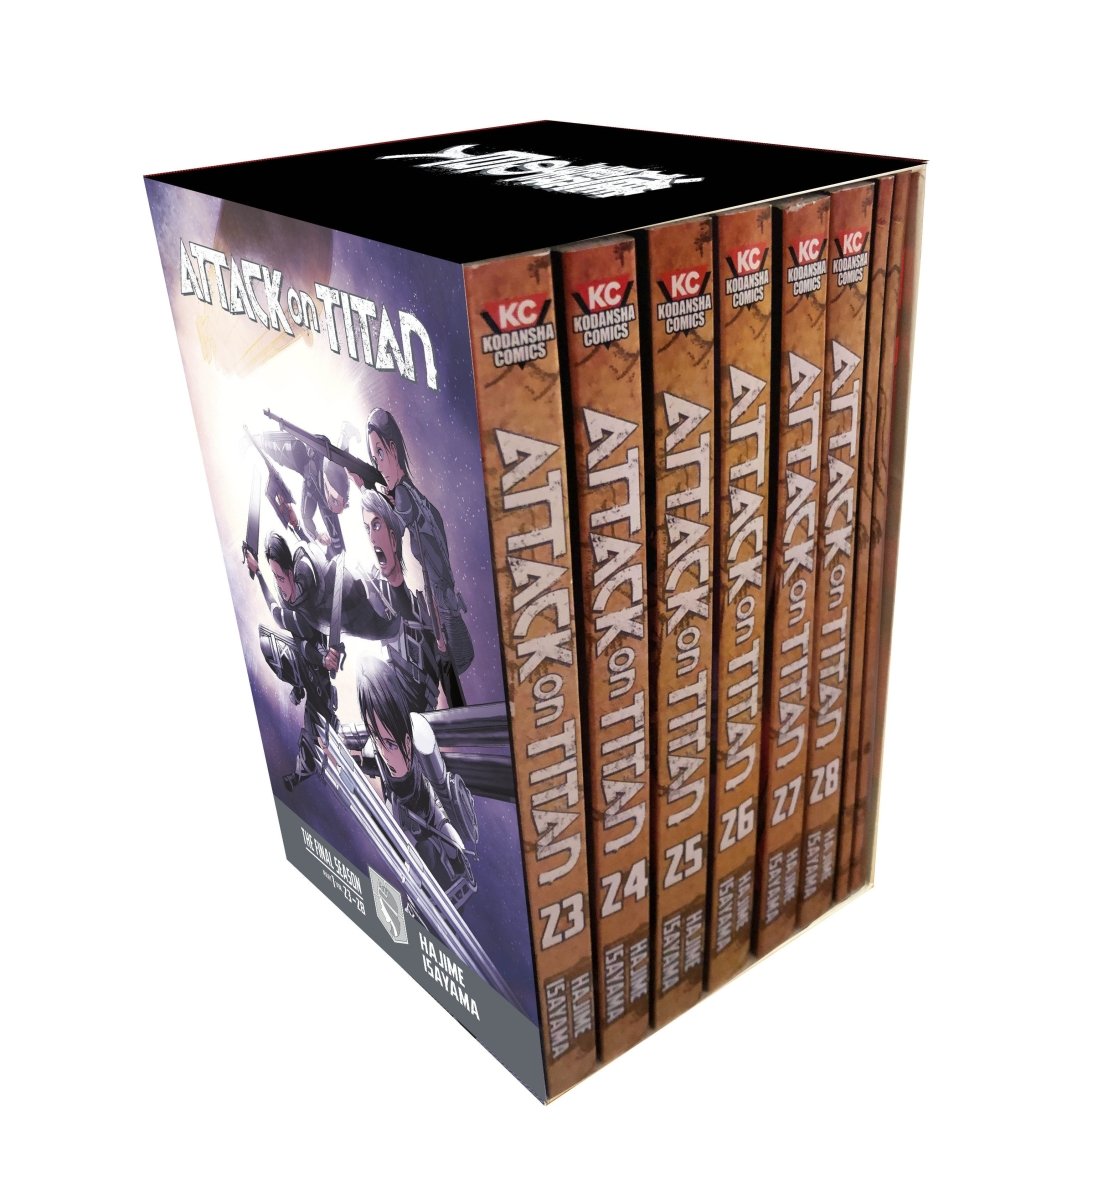 Attack On Titan The Final Season Part 1 Manga Box Set - Walt's Comic Shop